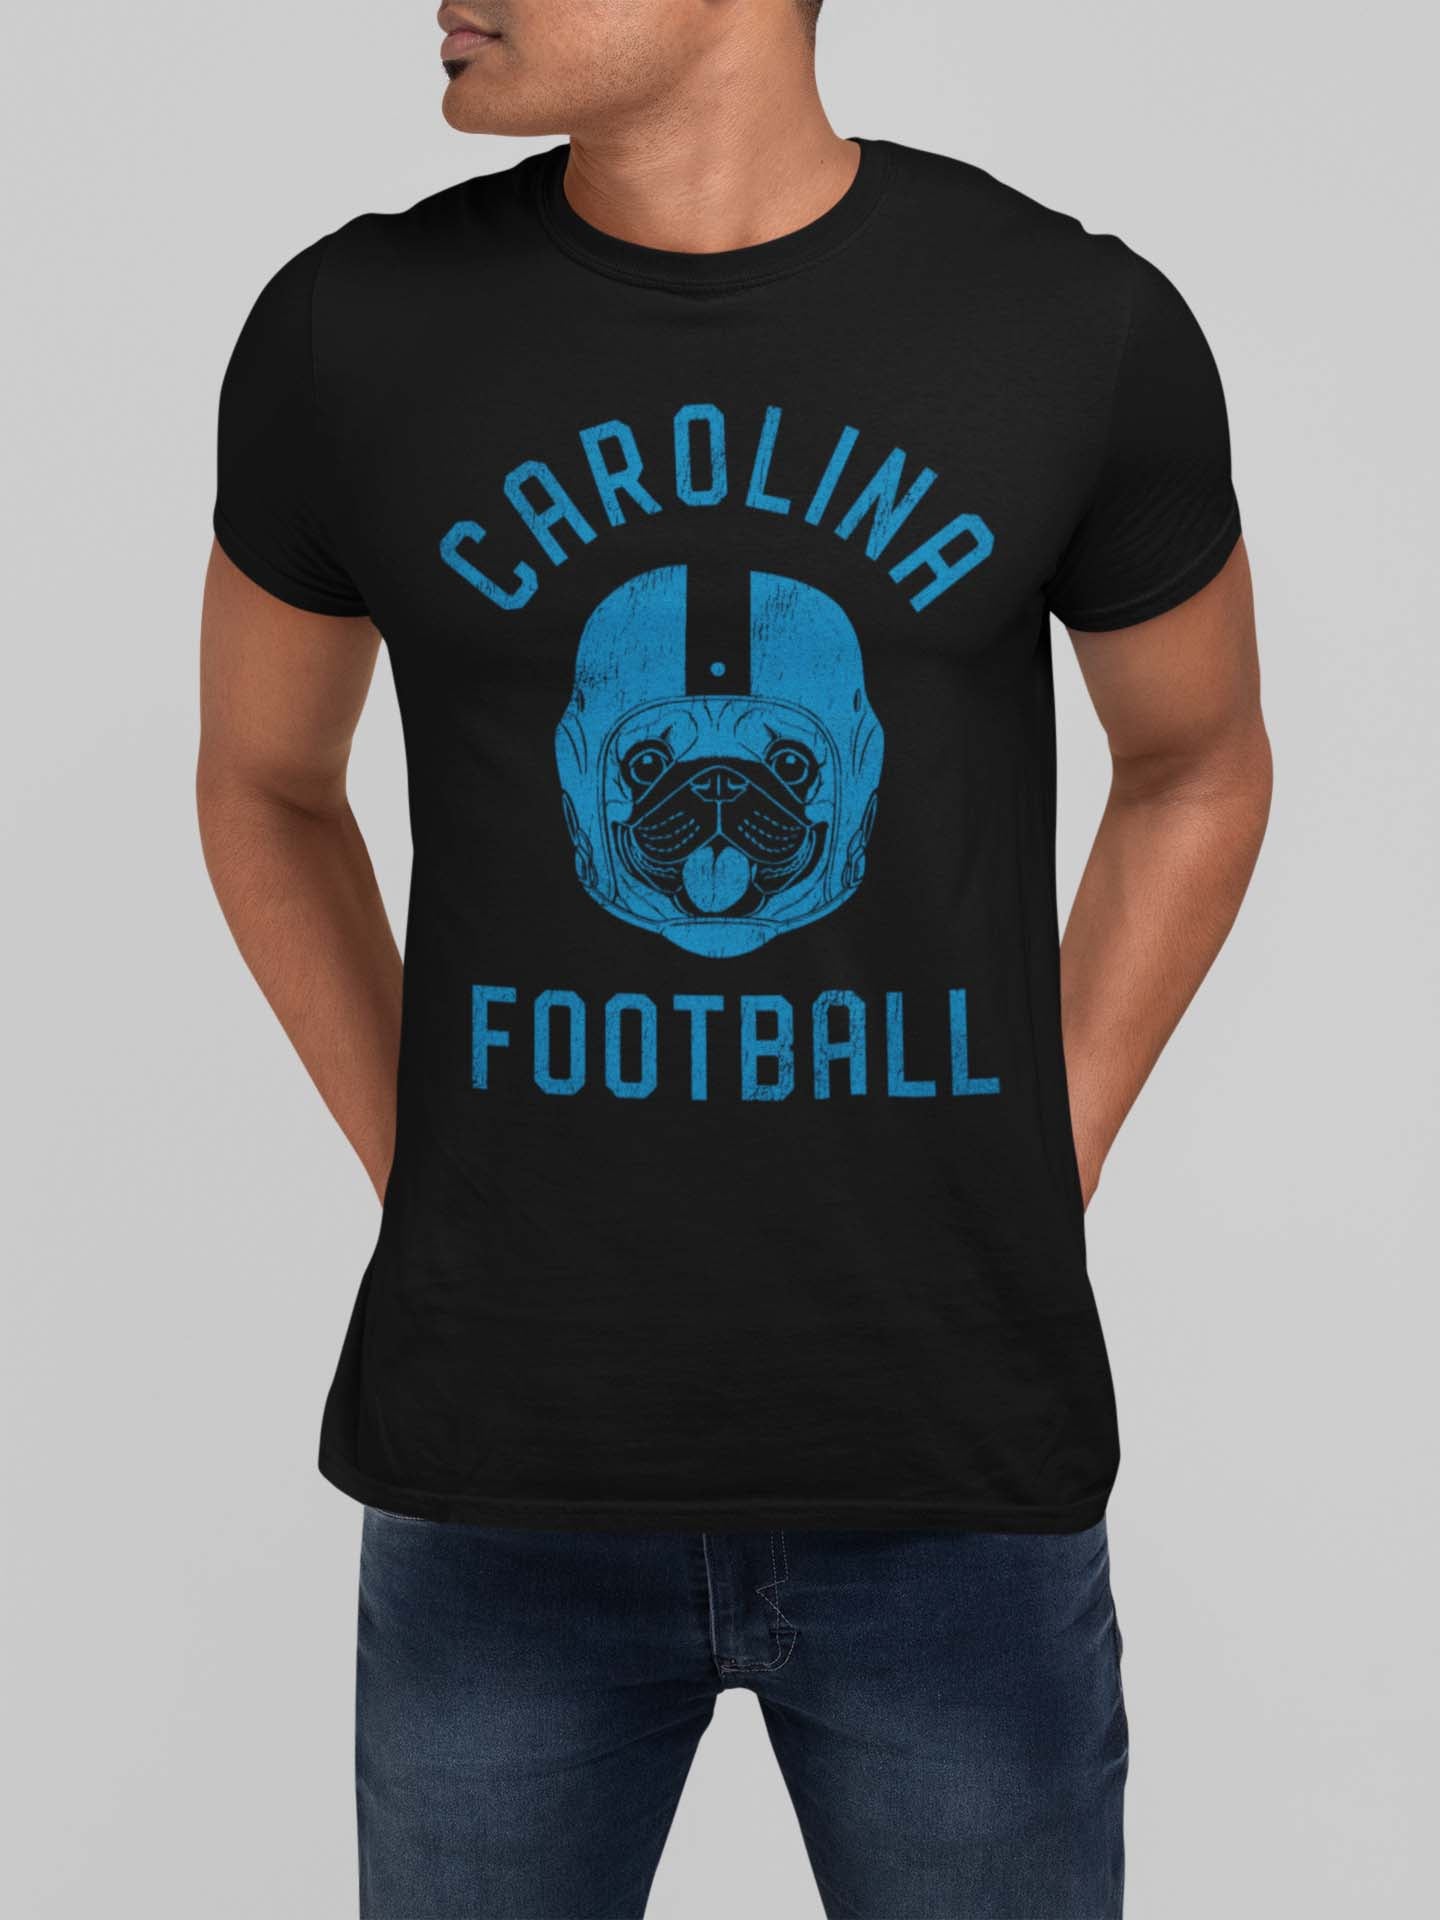 Carolina Football Pug T-Shirt